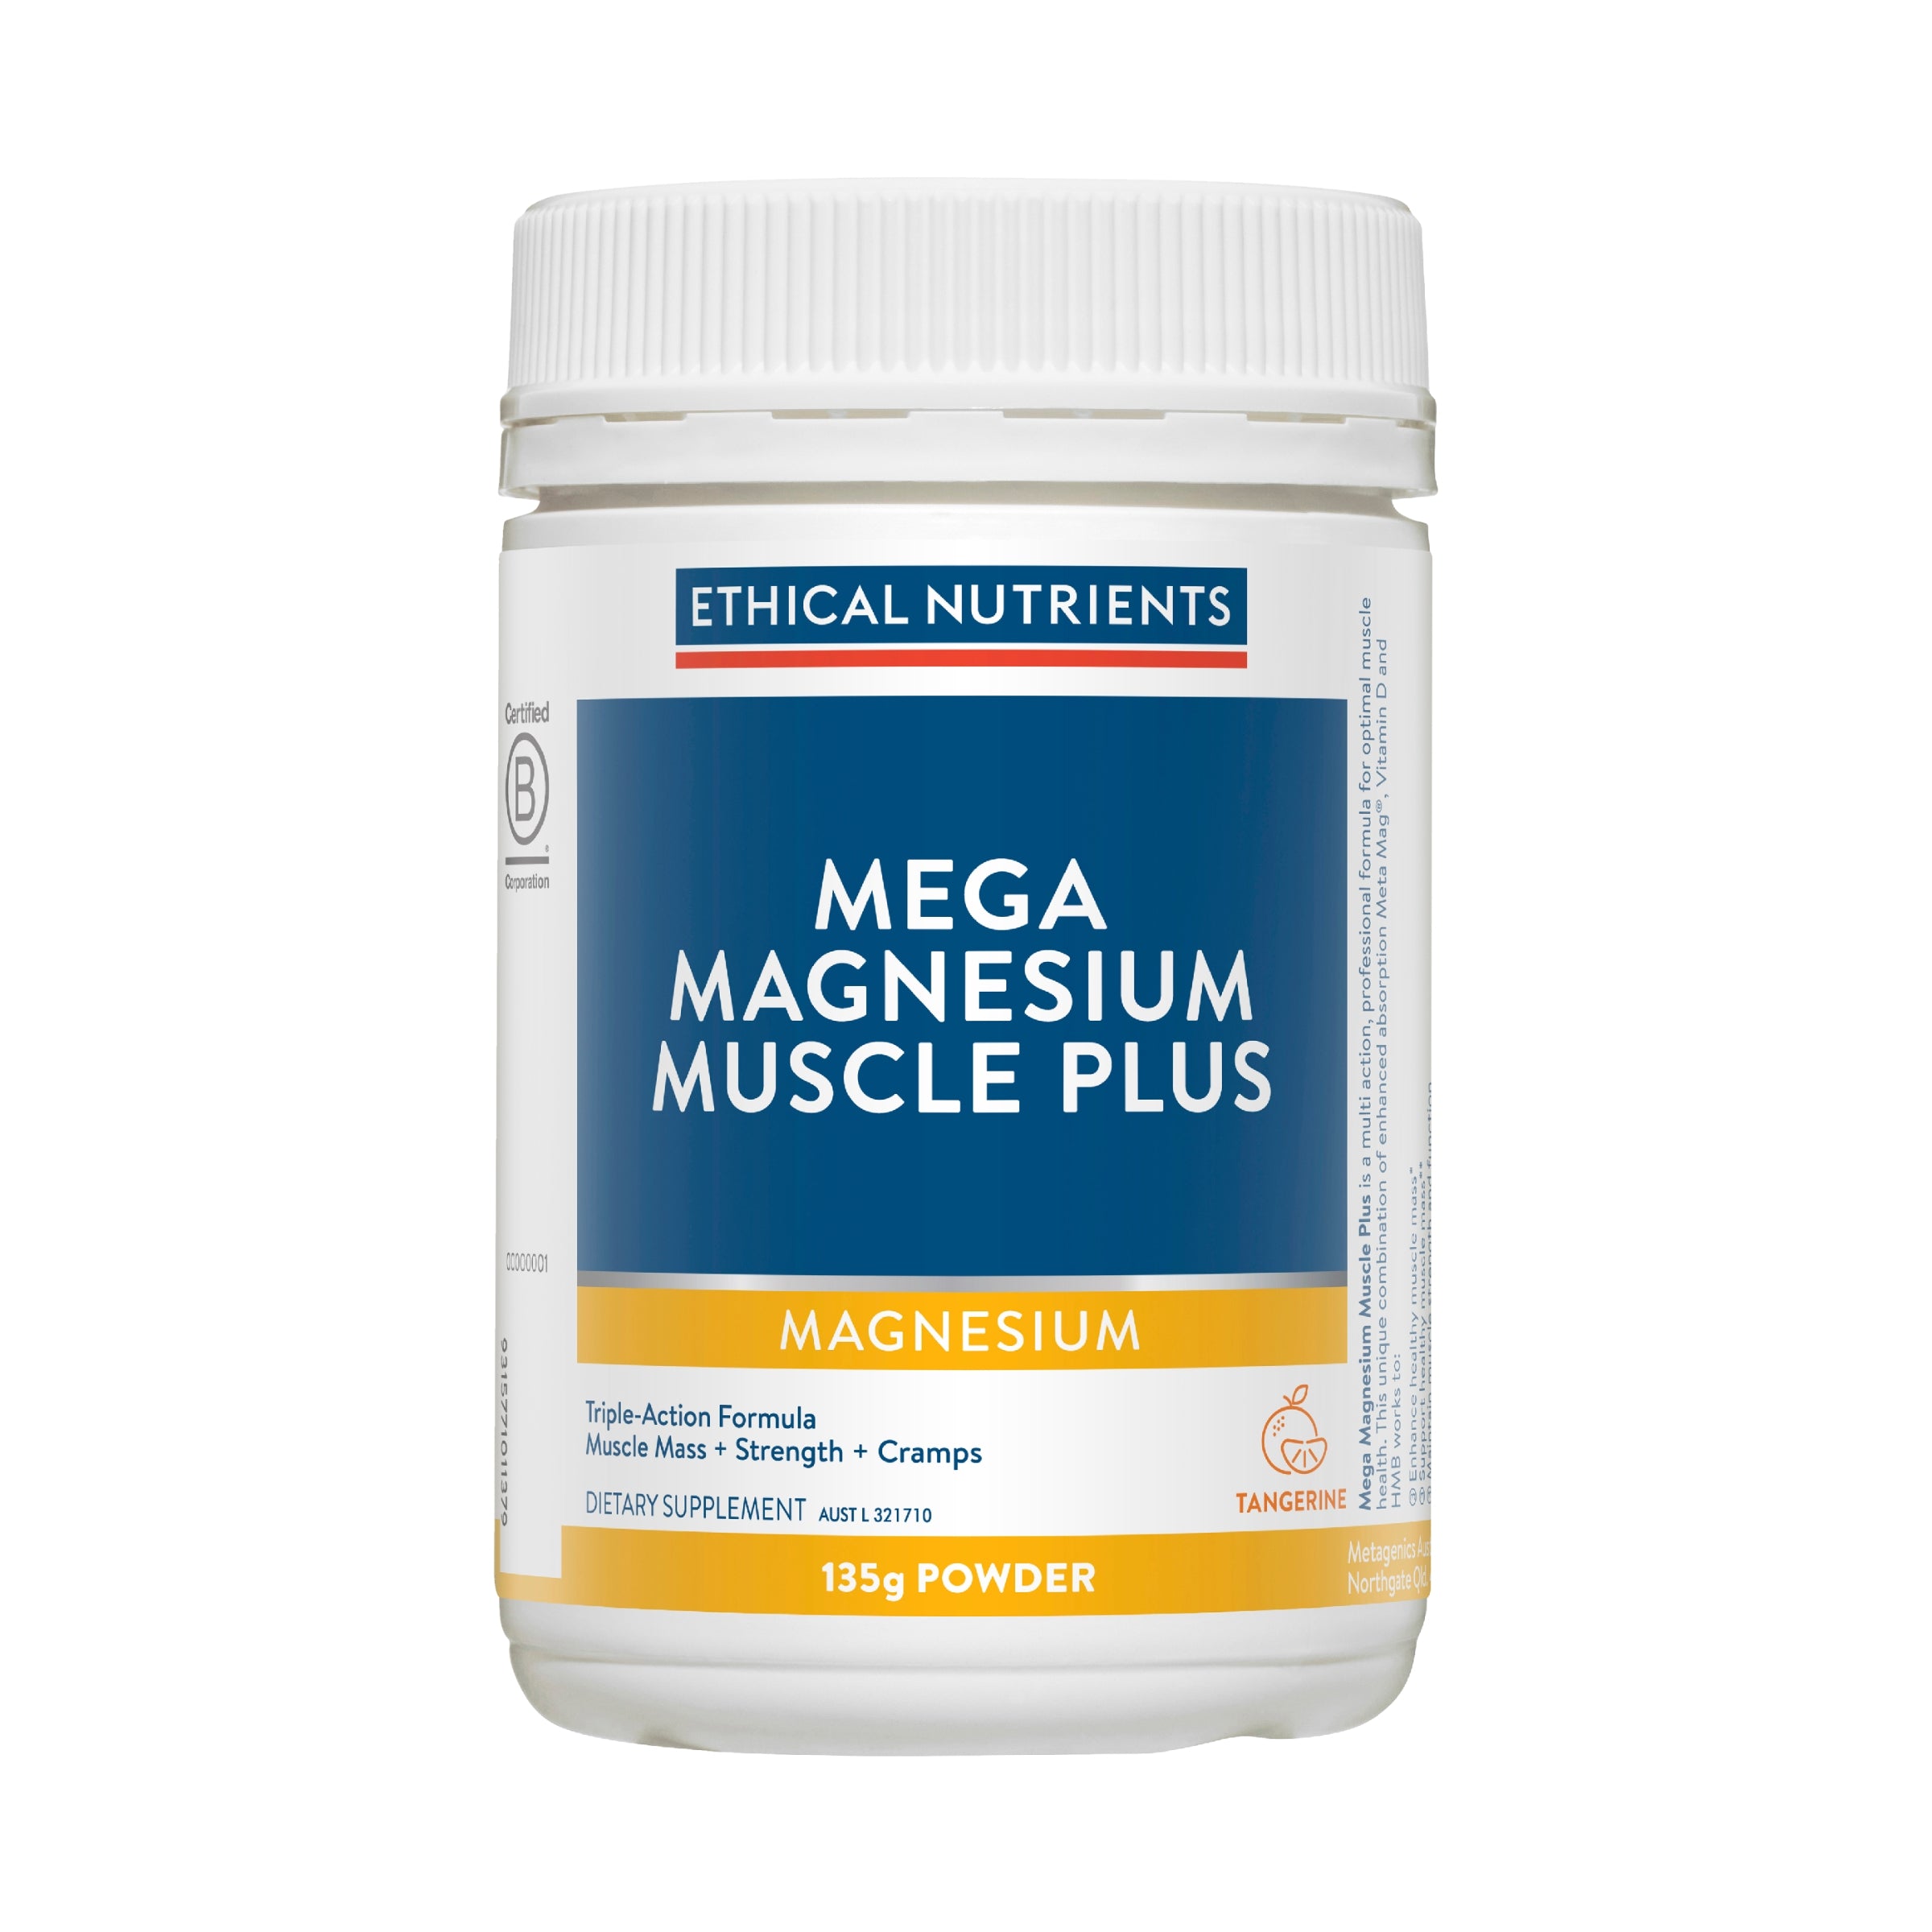 Ethical Nutrients Mega Magnesium Muscle Plus 135g Powder #size_135g